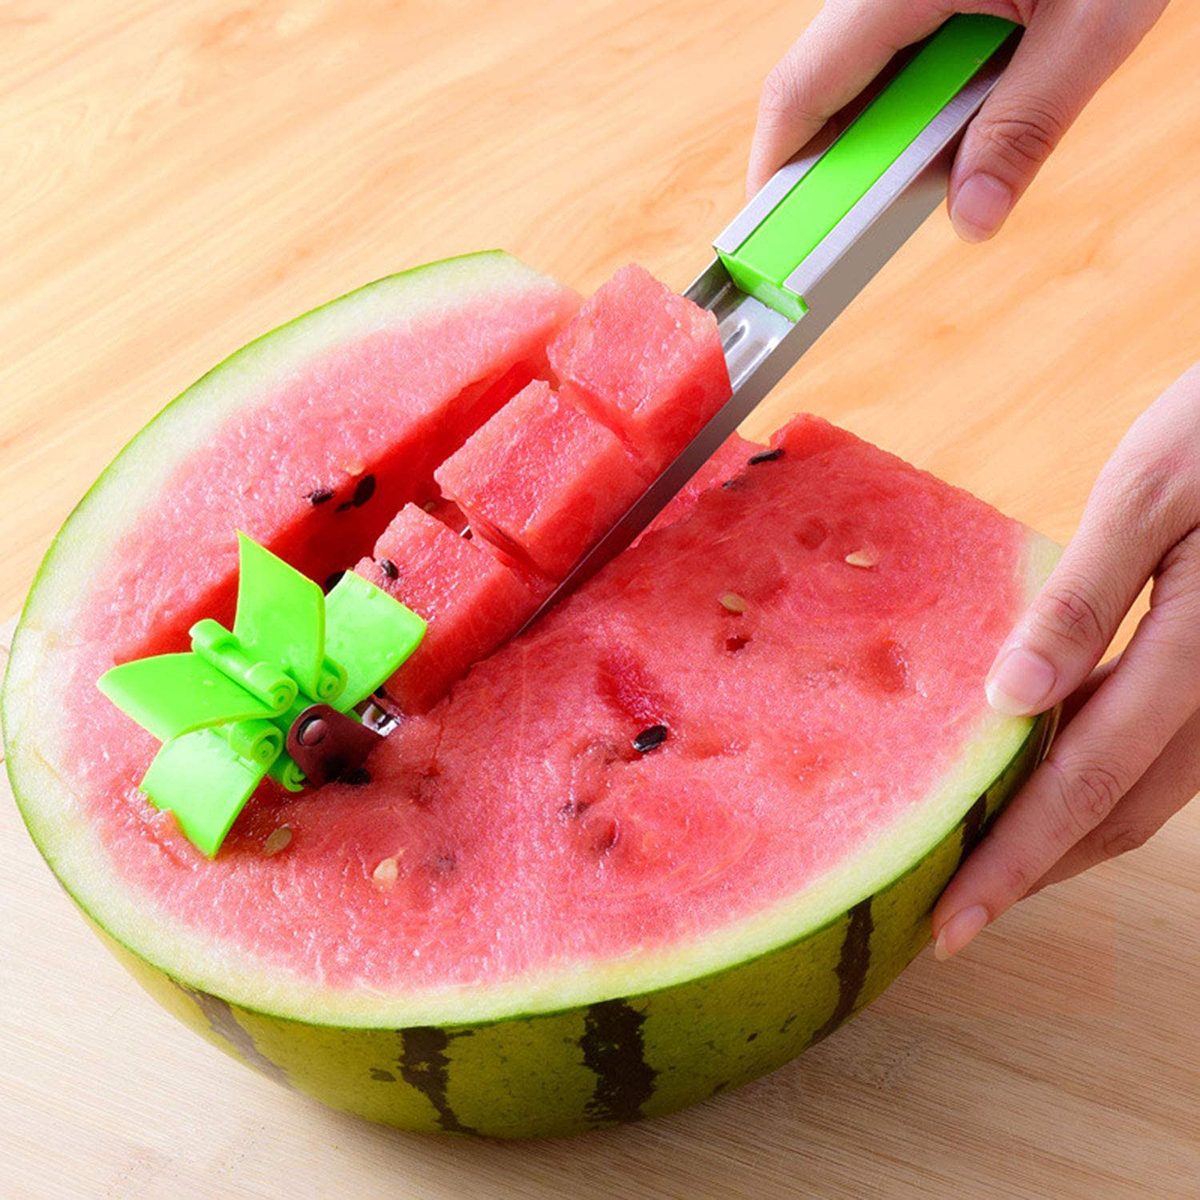 Watermelon Cutter Slicer Tool Stainless Steel Fruit Knife Molds